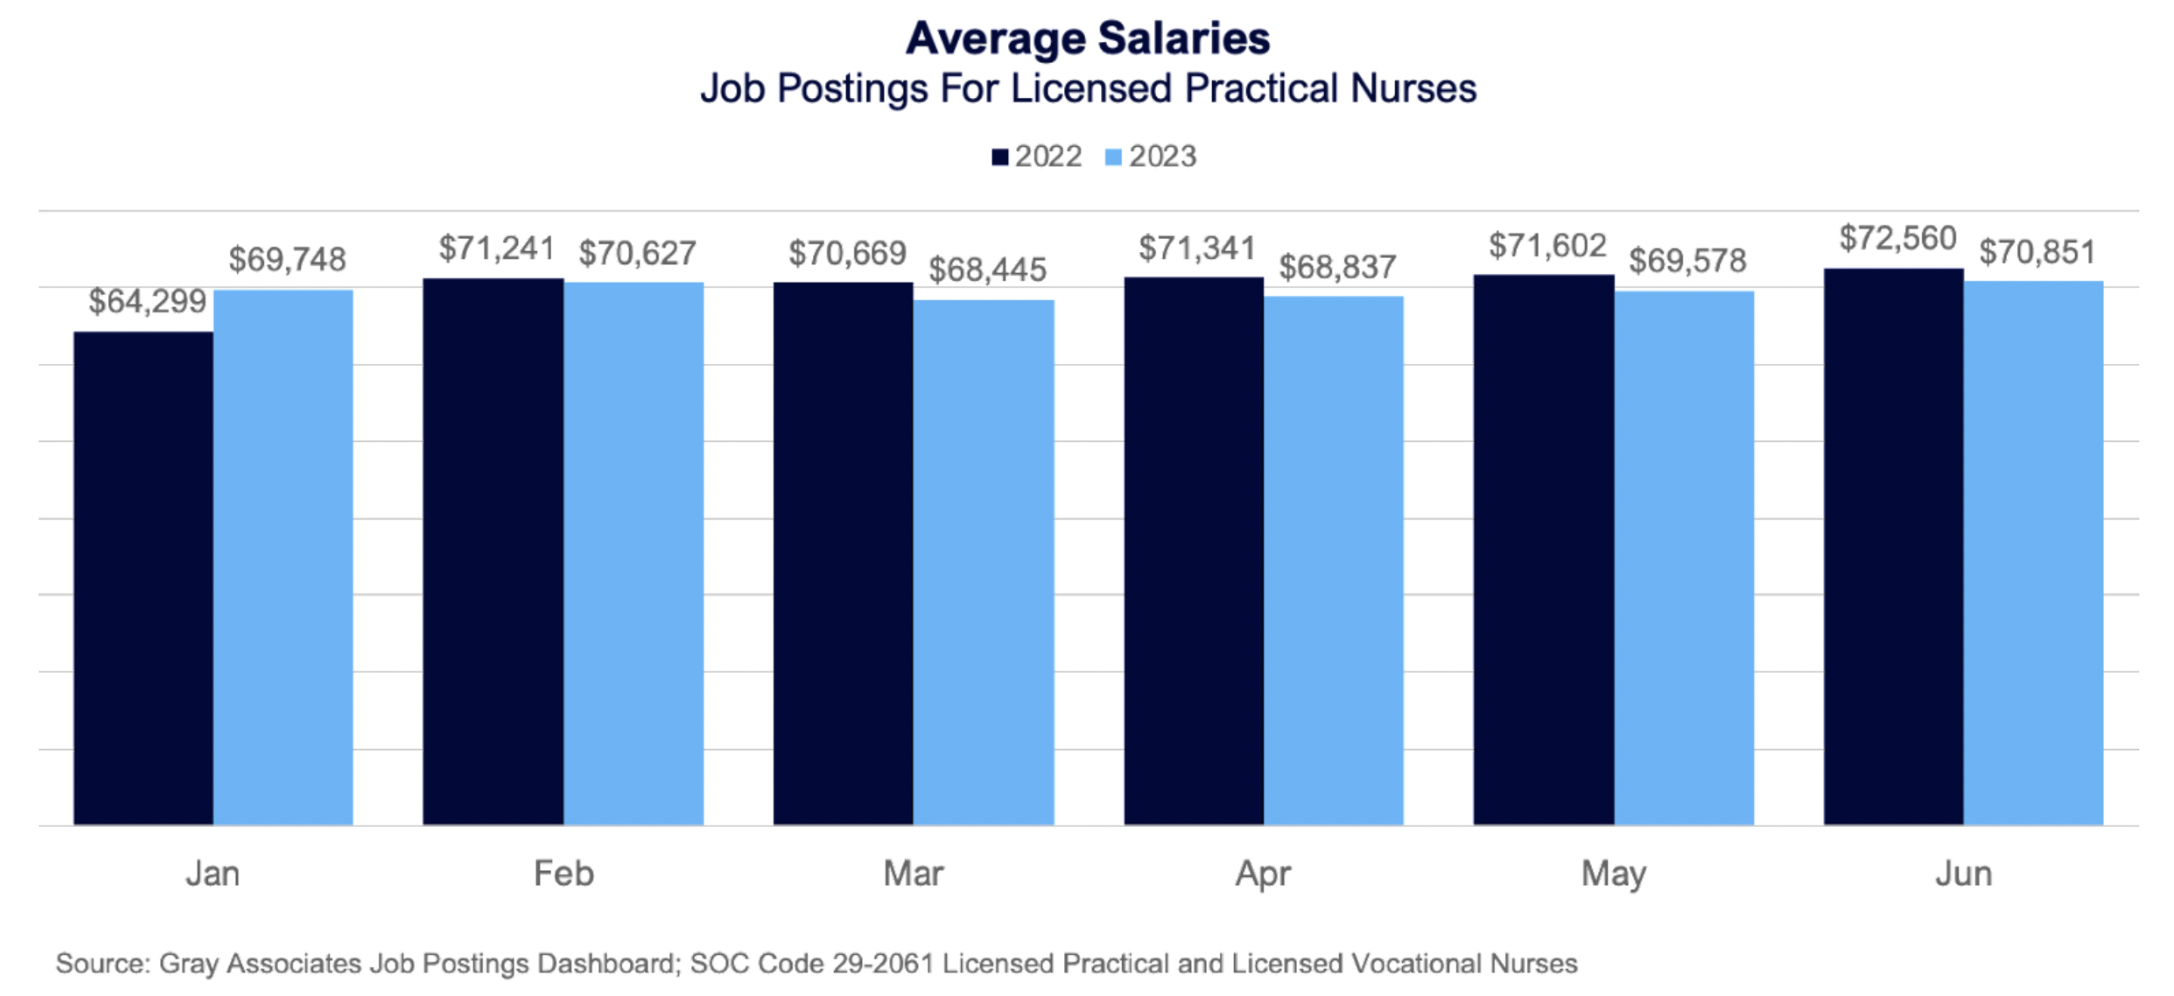 Average salaries - job postings for licenses practical nurses